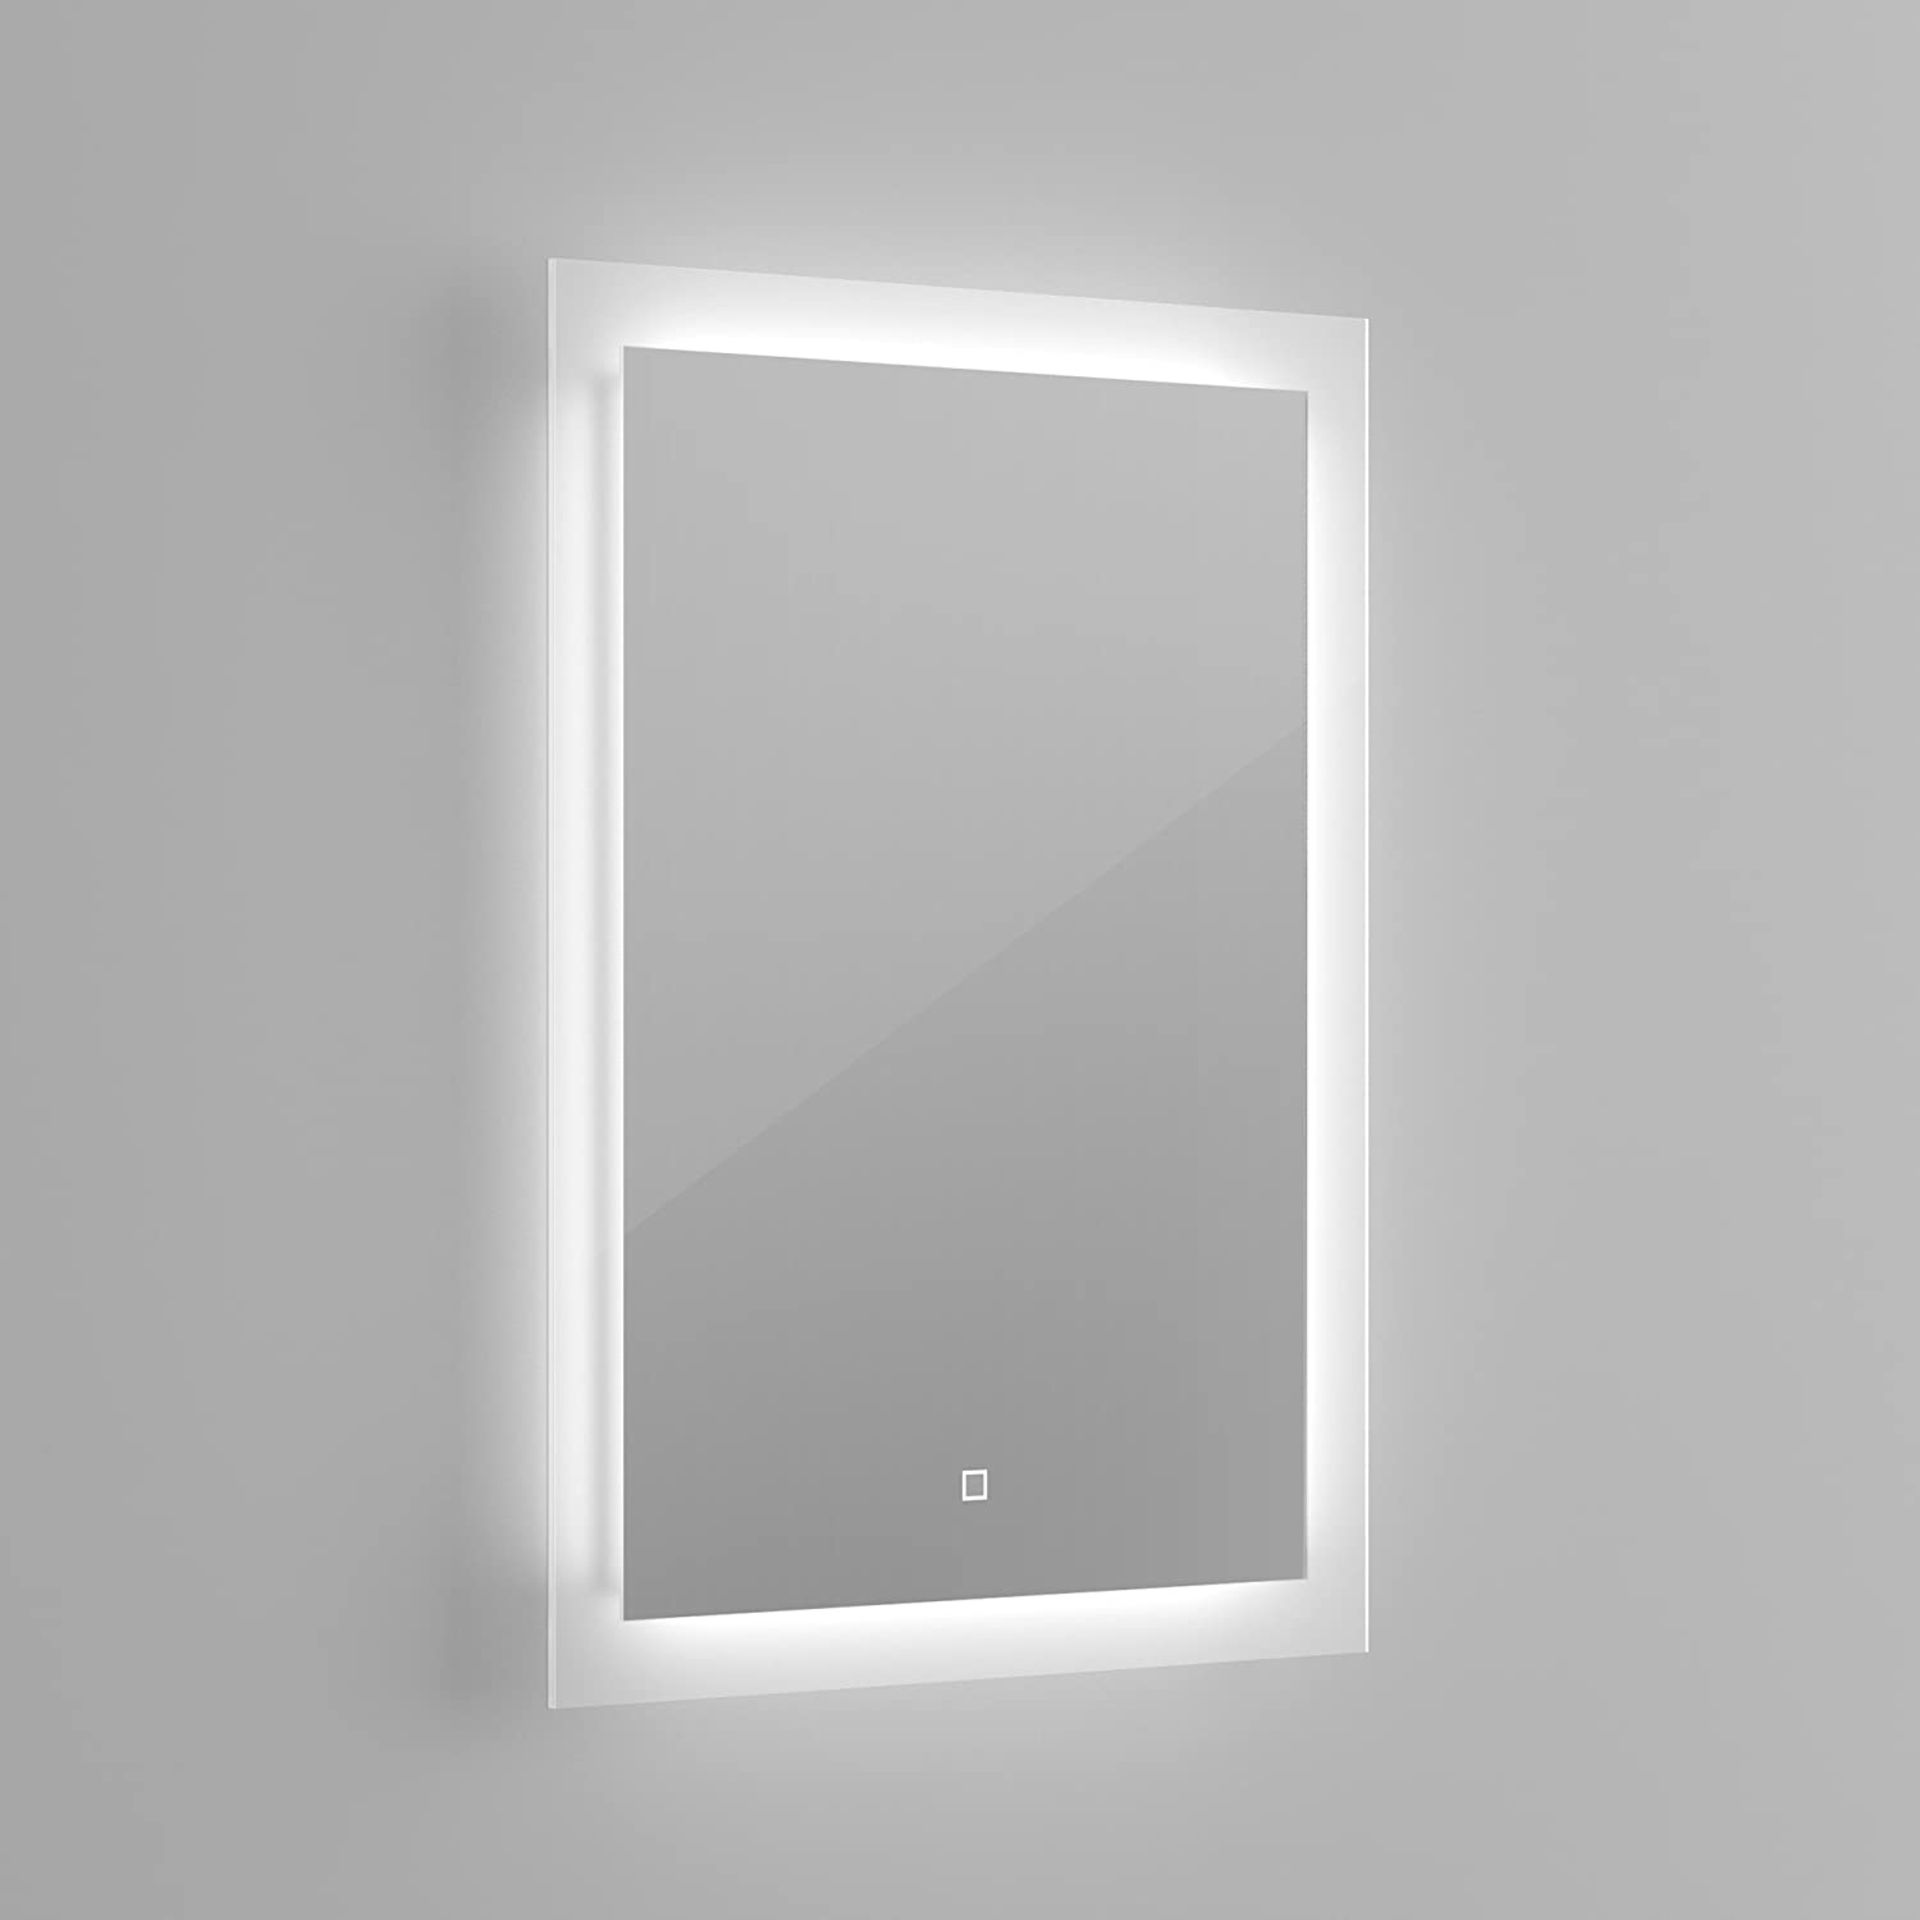 (JG21) 500 x 700 mm Illuminated LED Bathroom Mirror With Light Vanity Light Sensor + Demister B... - Image 2 of 4